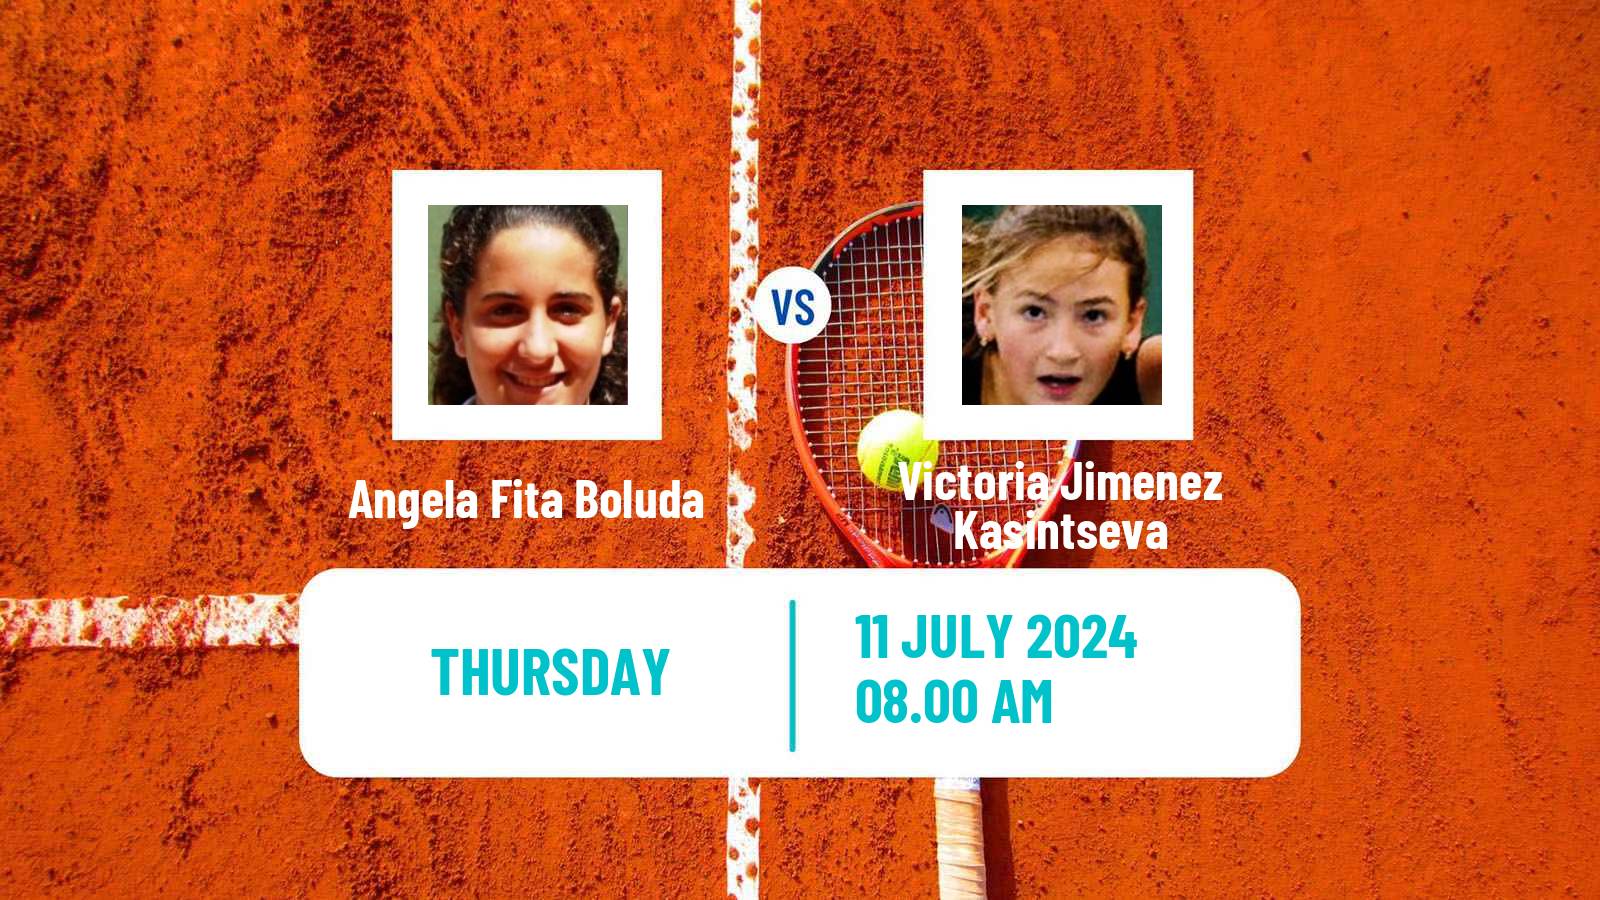 Tennis ITF W75 H Rome Women Angela Fita Boluda - Victoria Jimenez Kasintseva